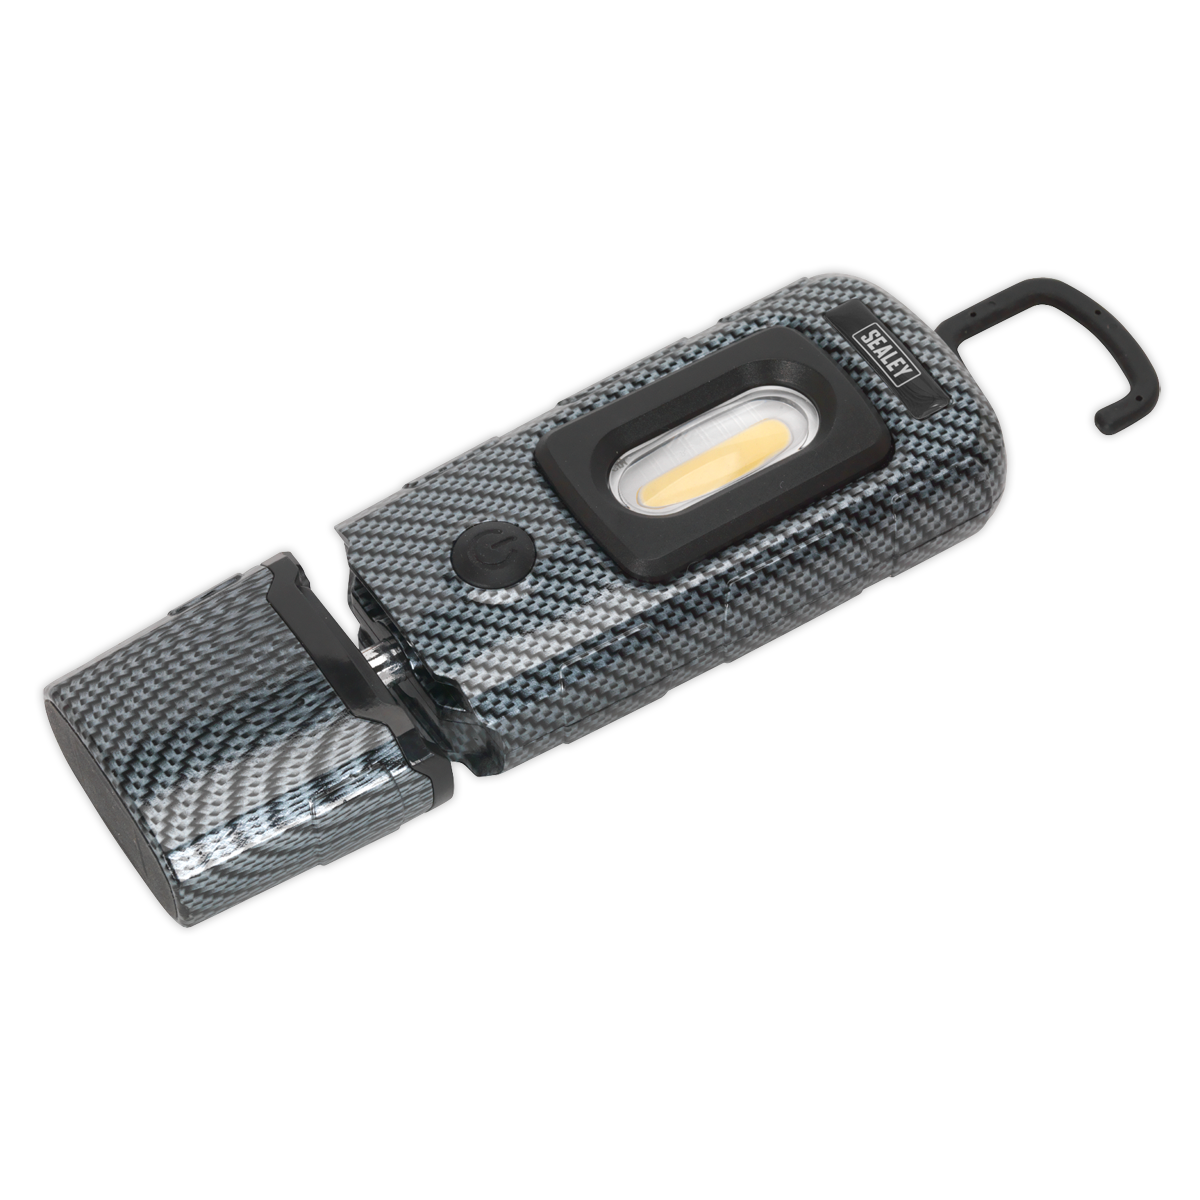 Sealey Rechargeable 360° Inspection Light 3W COB & 1W SMD LED Carbon Fibre Effect